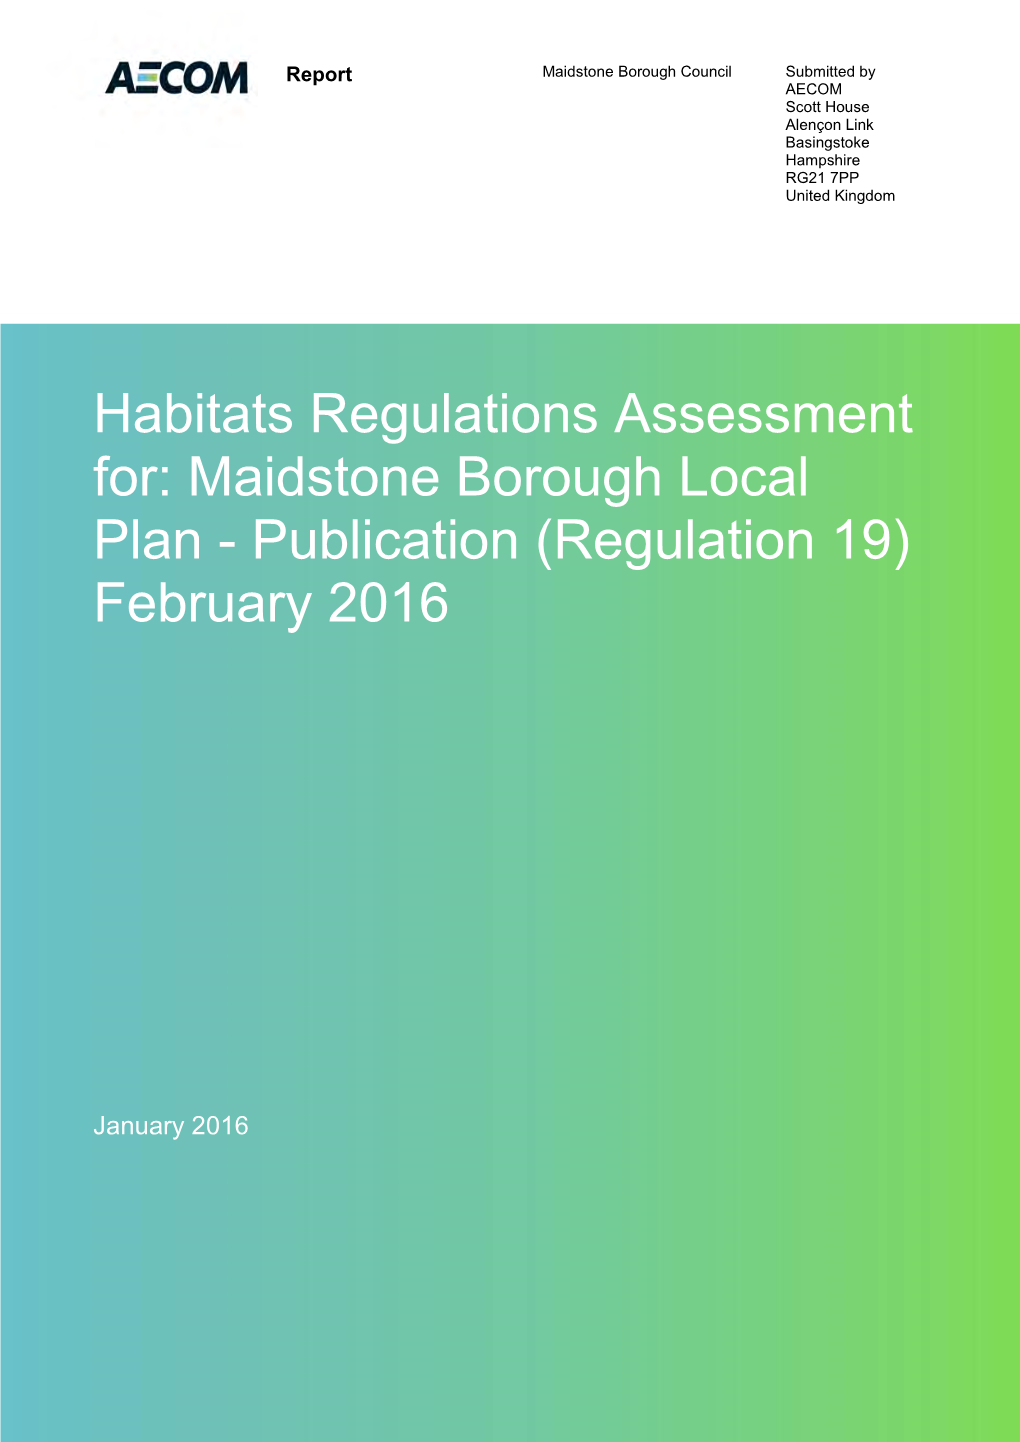 Habitats Regulations Assessment For: Maidstone Borough Local Plan - Publication (Regulation 19) February 2016